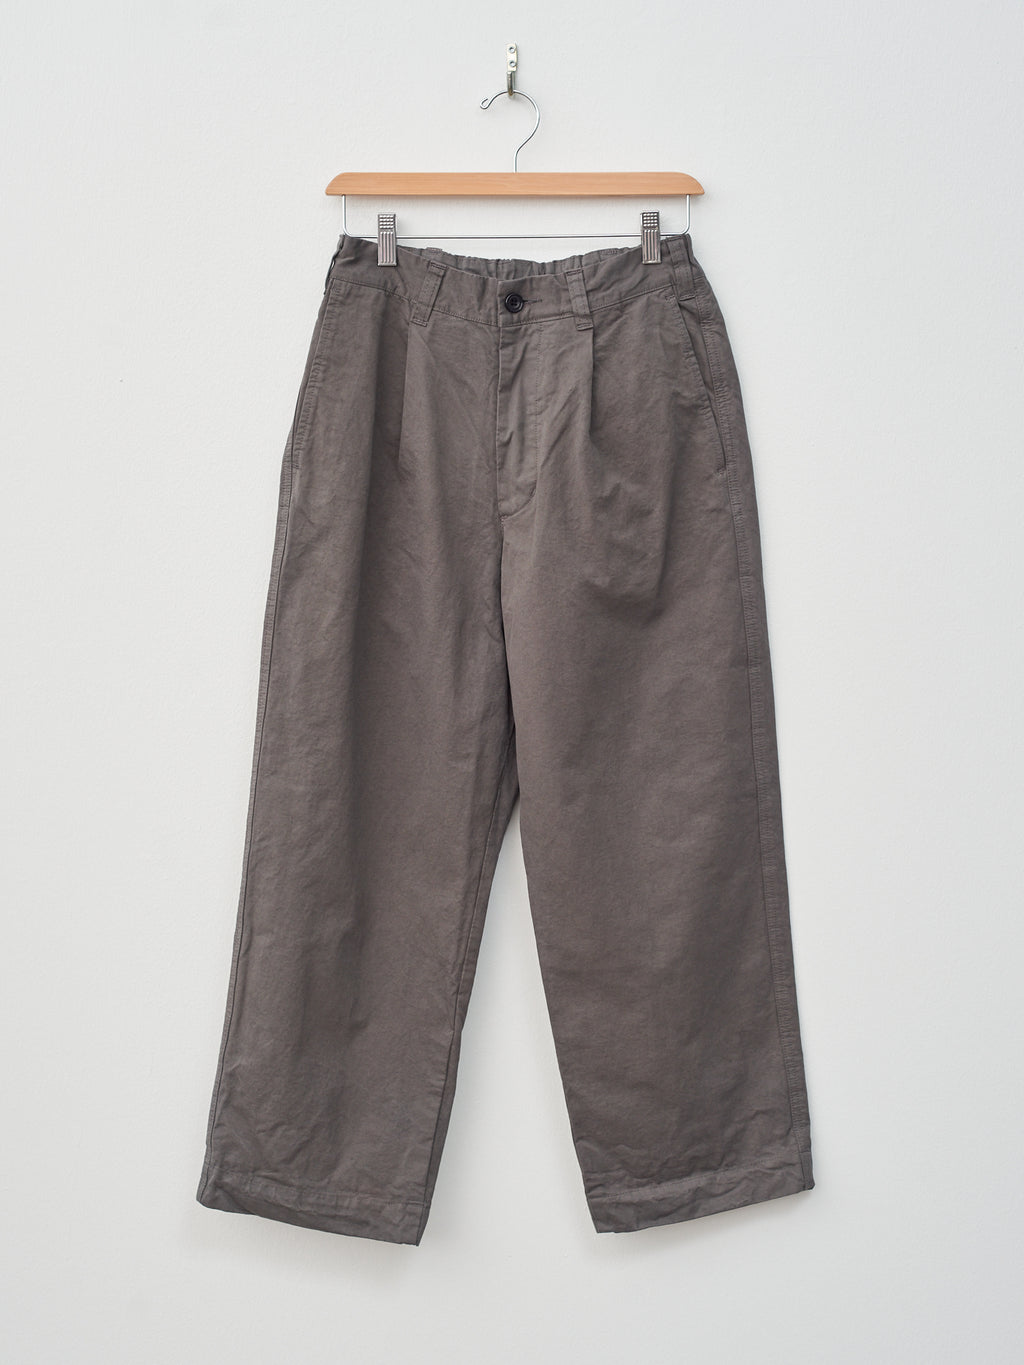 Namu Shop - Veritecoeur Straight Tuck Pants - Gray